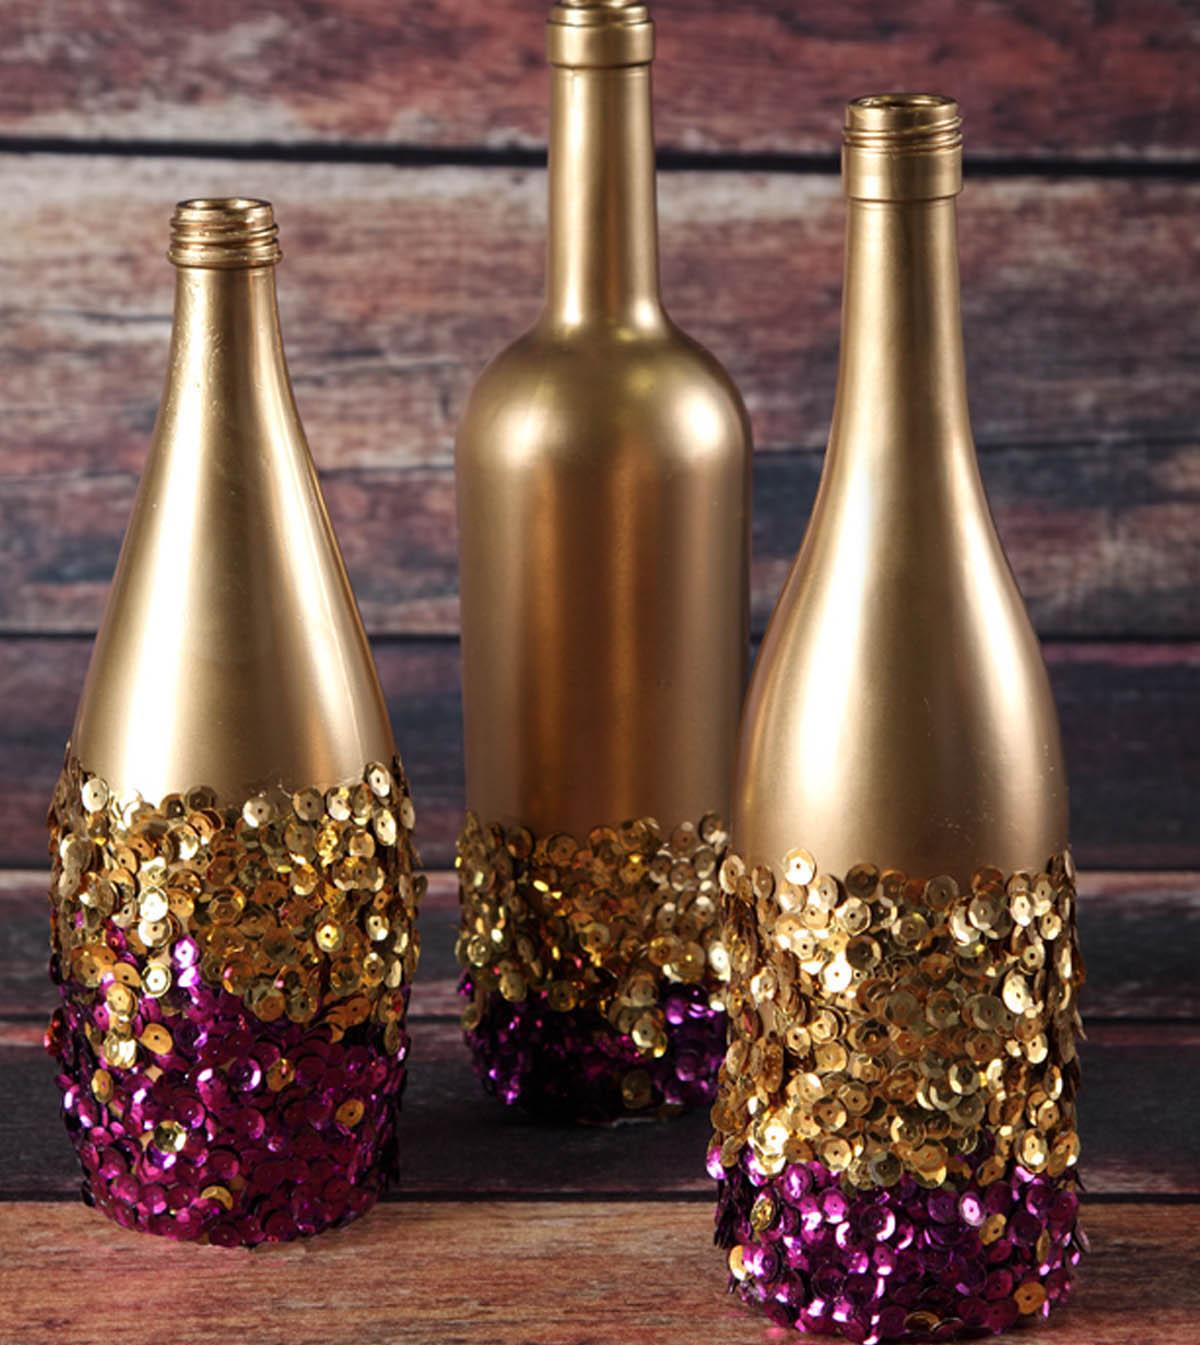 Золотистая краска и пайетки в декоре бутылок